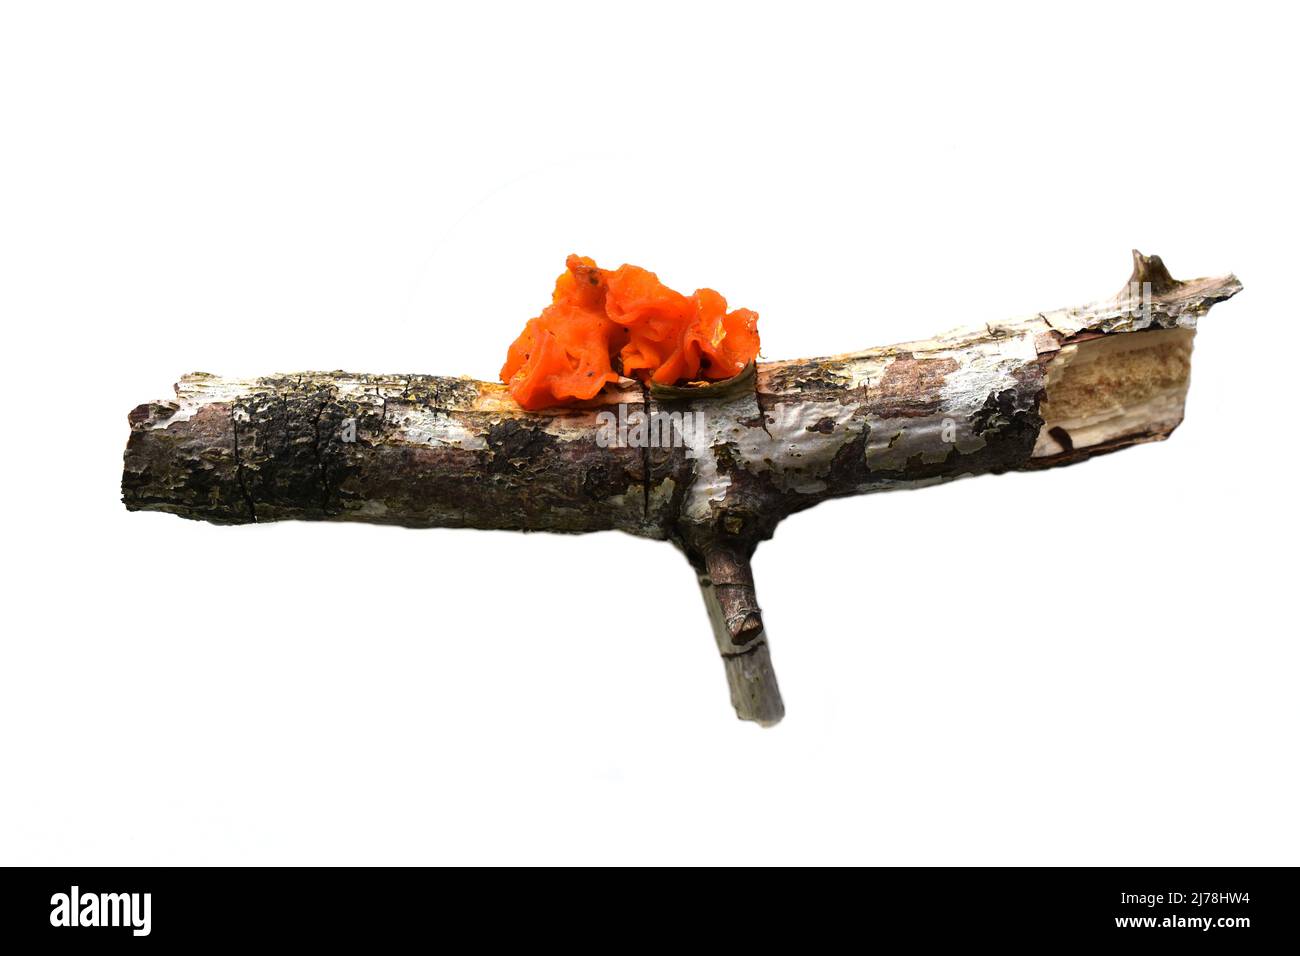 The orange jelly fungus yellow brain tremella mesenterica on a dead tree branch Stock Photo